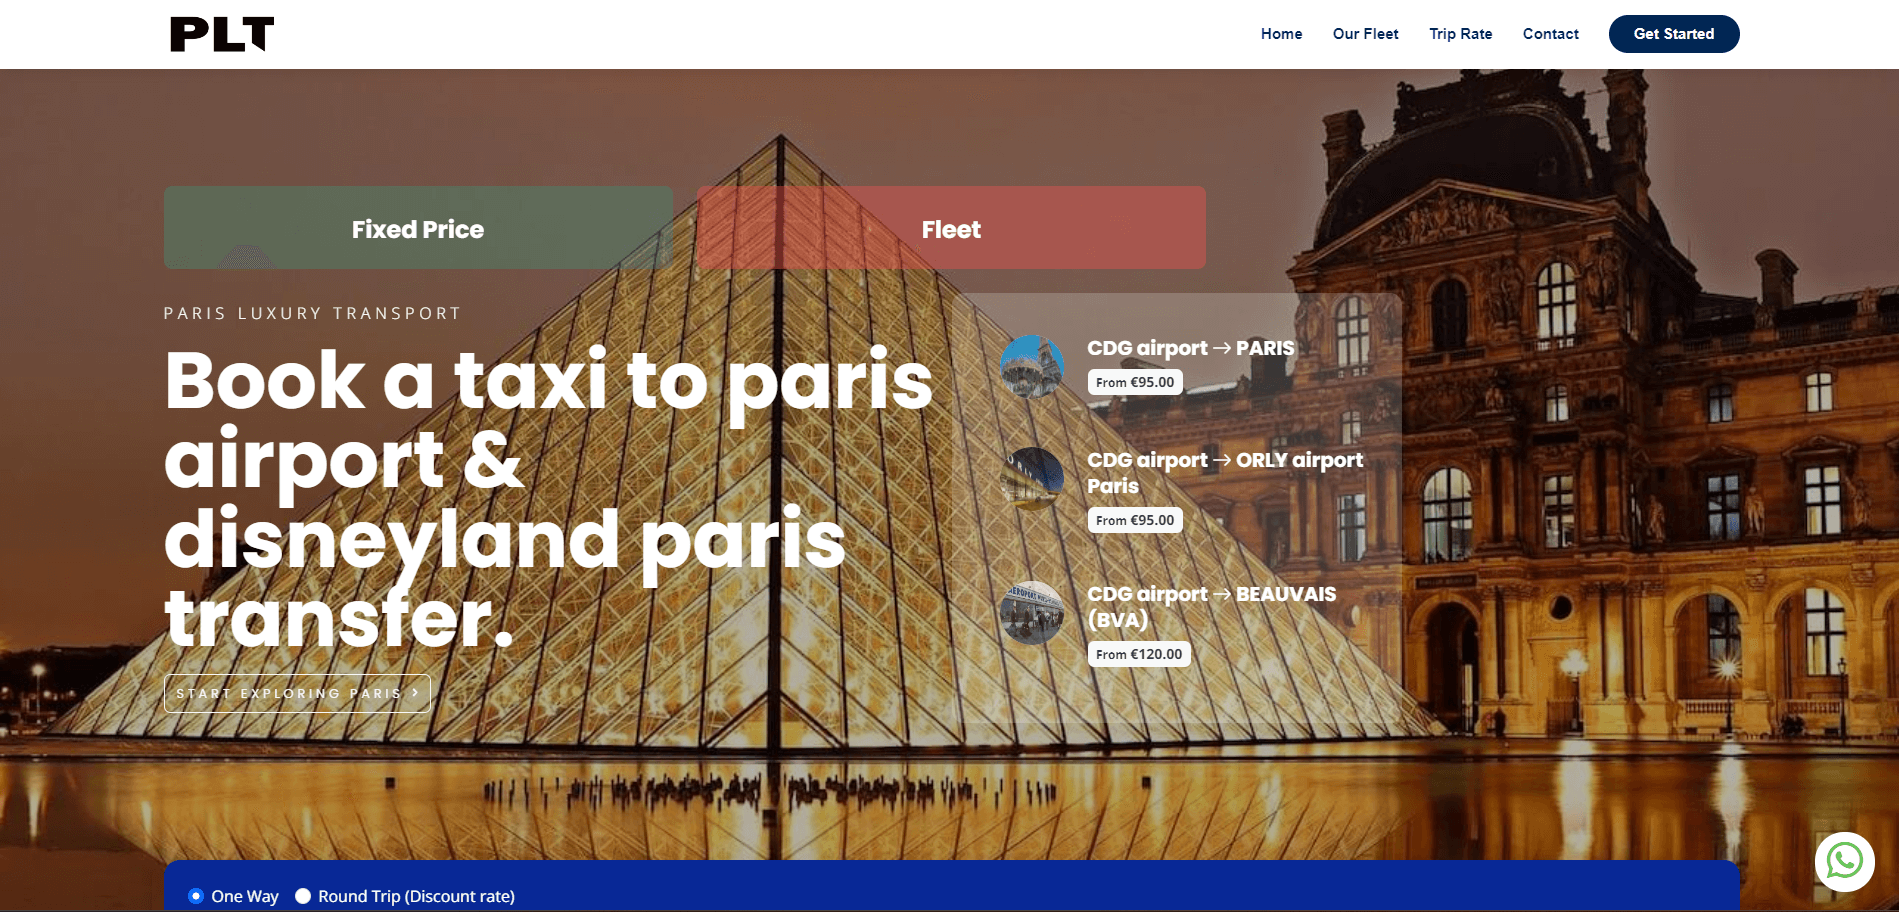 Paris Luxury Transport.Kp (PLT)